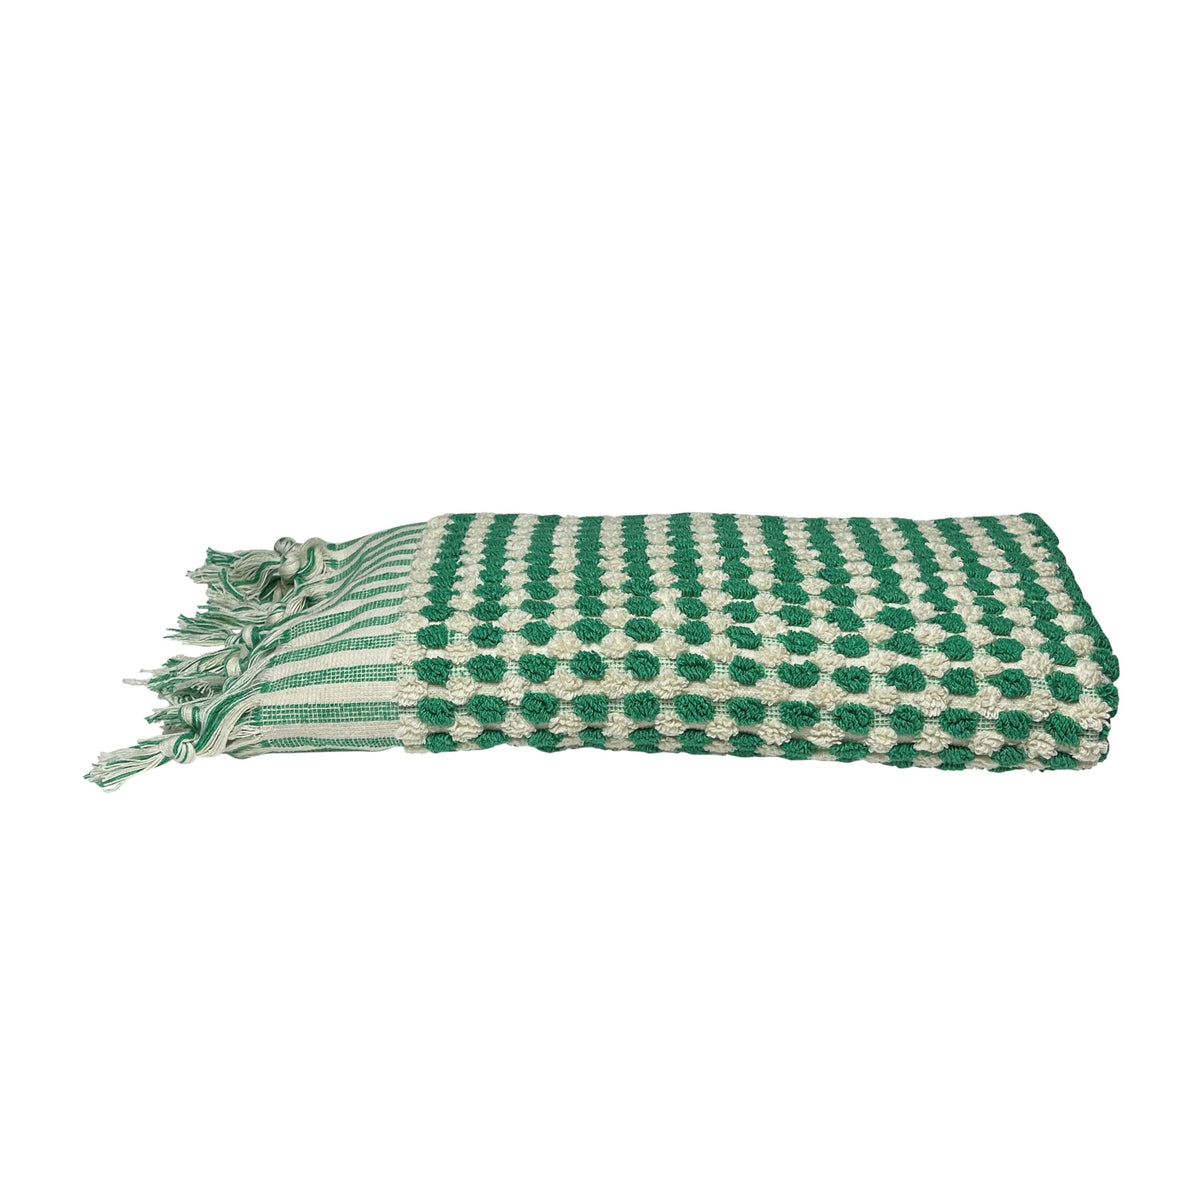 Gæstehåndklæde i bomuld fra Lykïa · farve grøn · produceret i Tyrkiet · Niedziella & Friends (7560575123684)